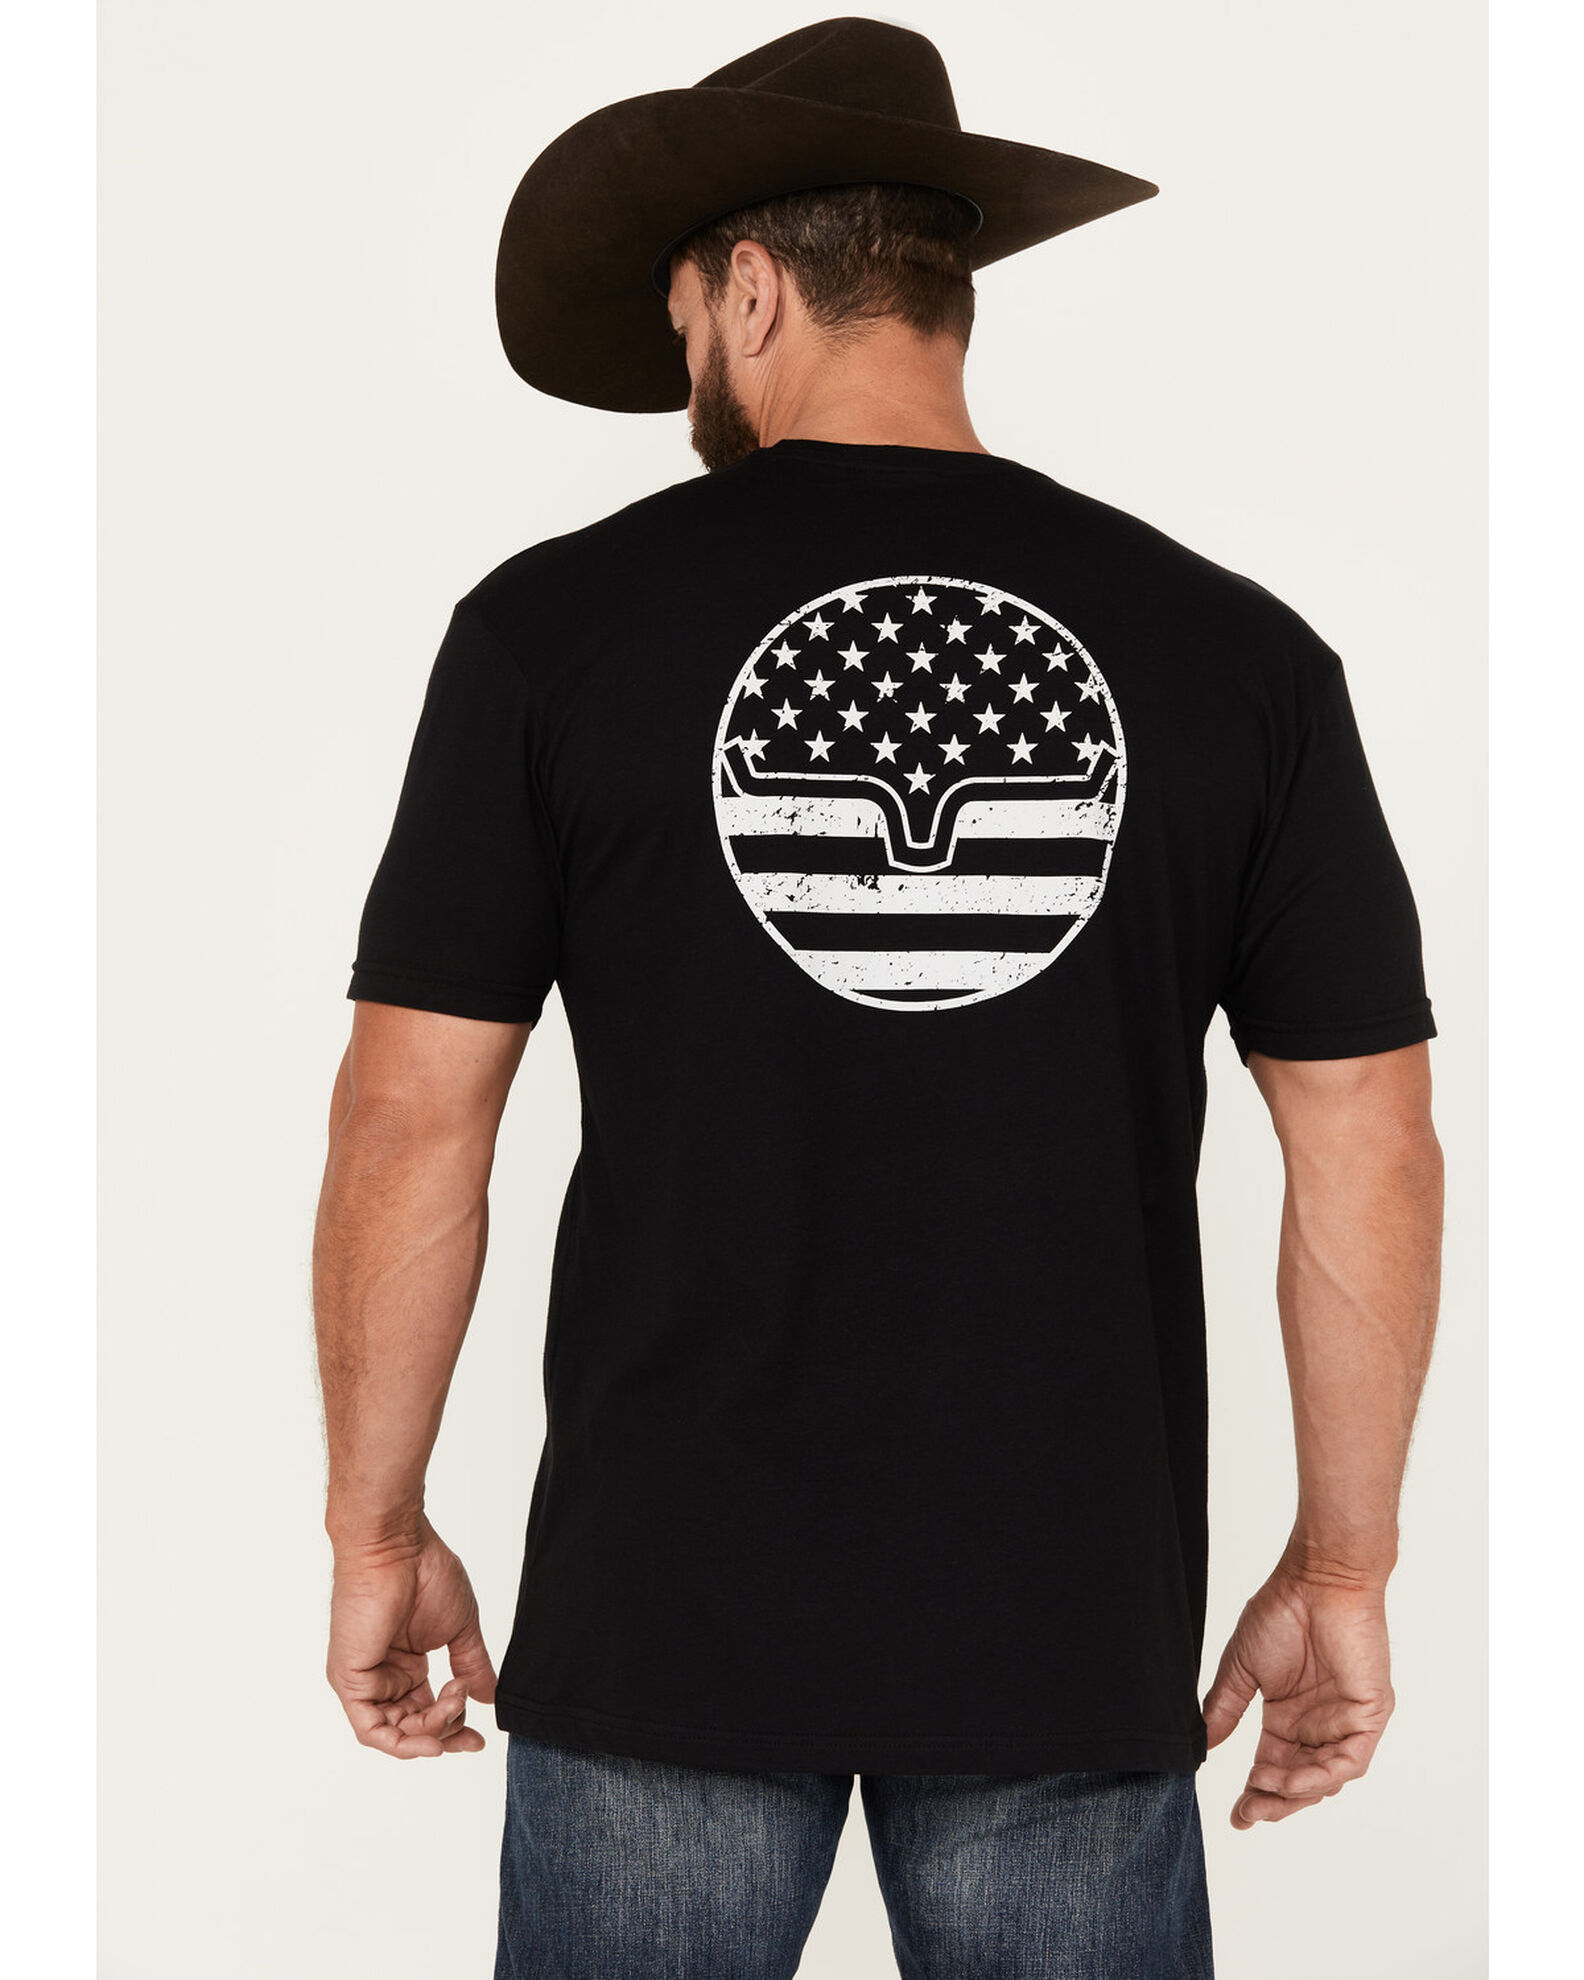 Kimes Ranch Men's American Bullseye Short Sleeve Graphic T-Shirt